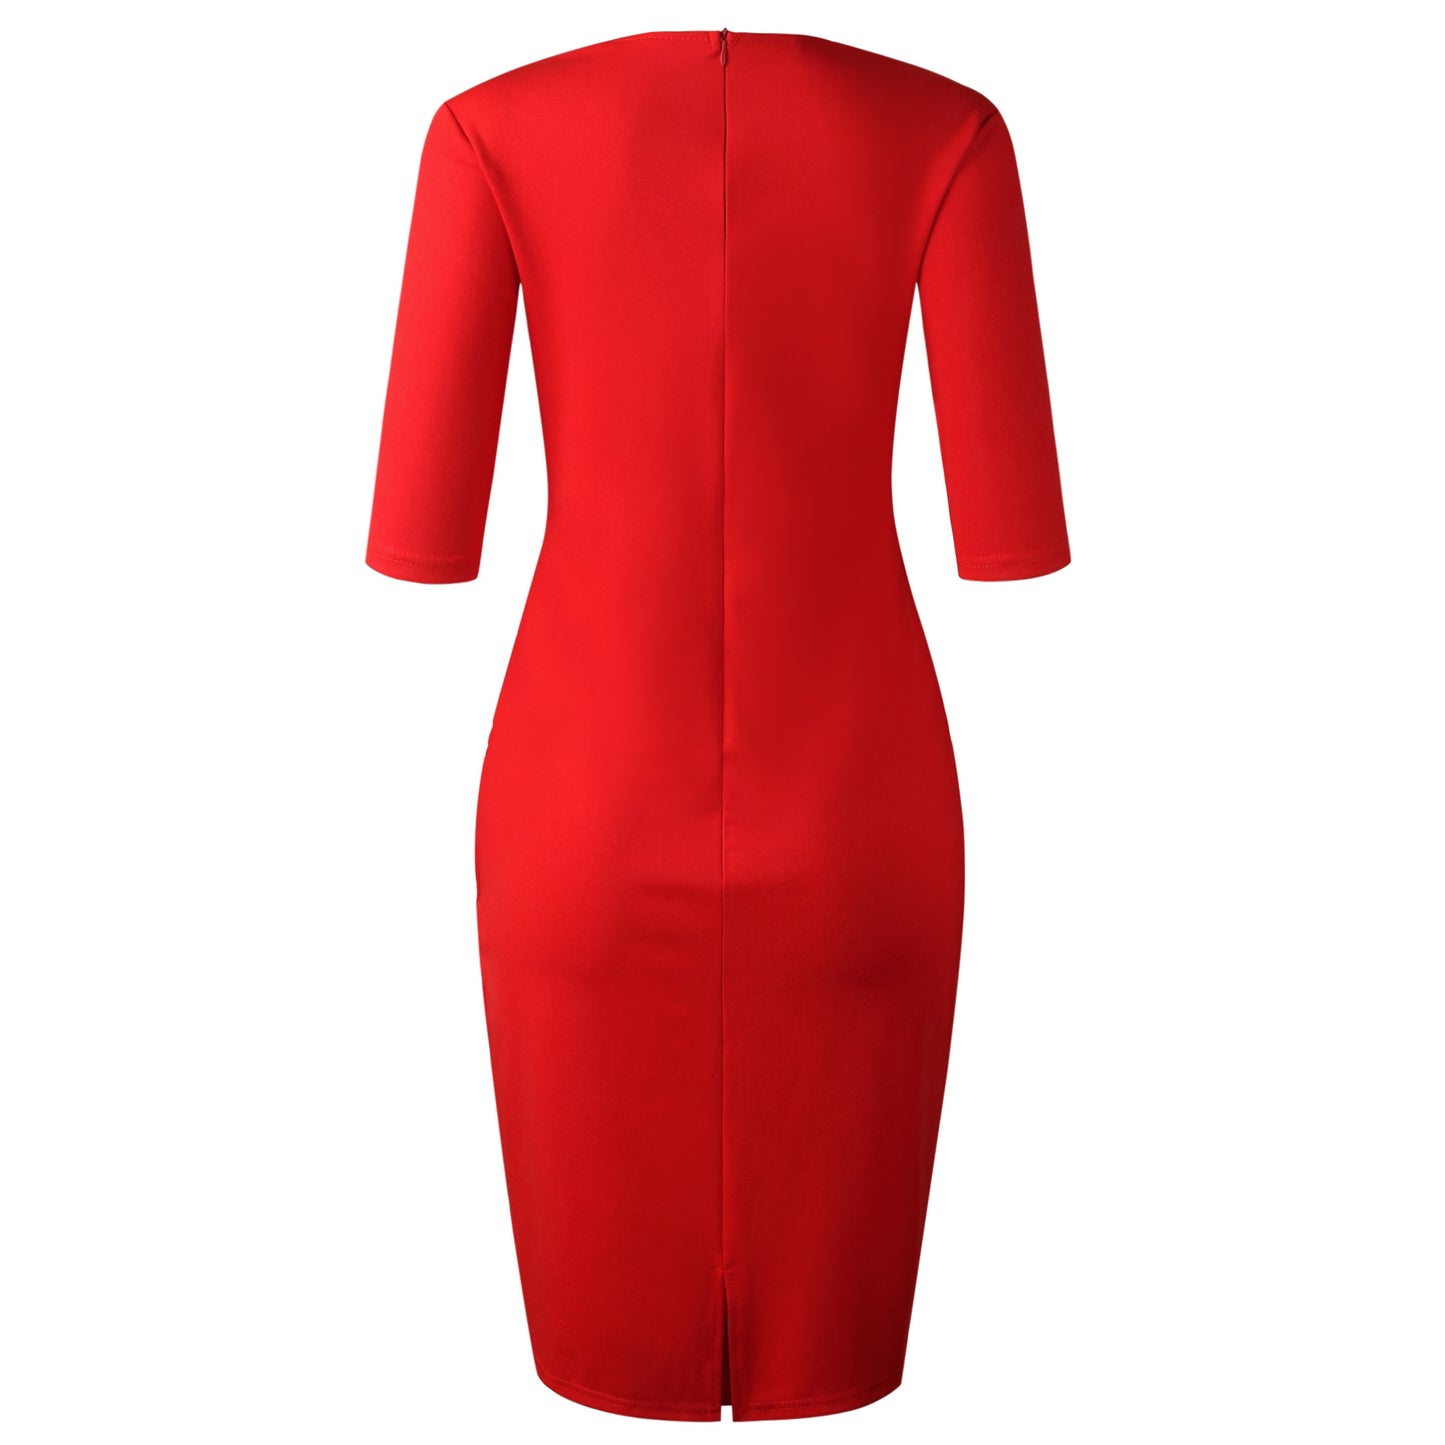 Mbluxy Red Bodycon Dress V Neck